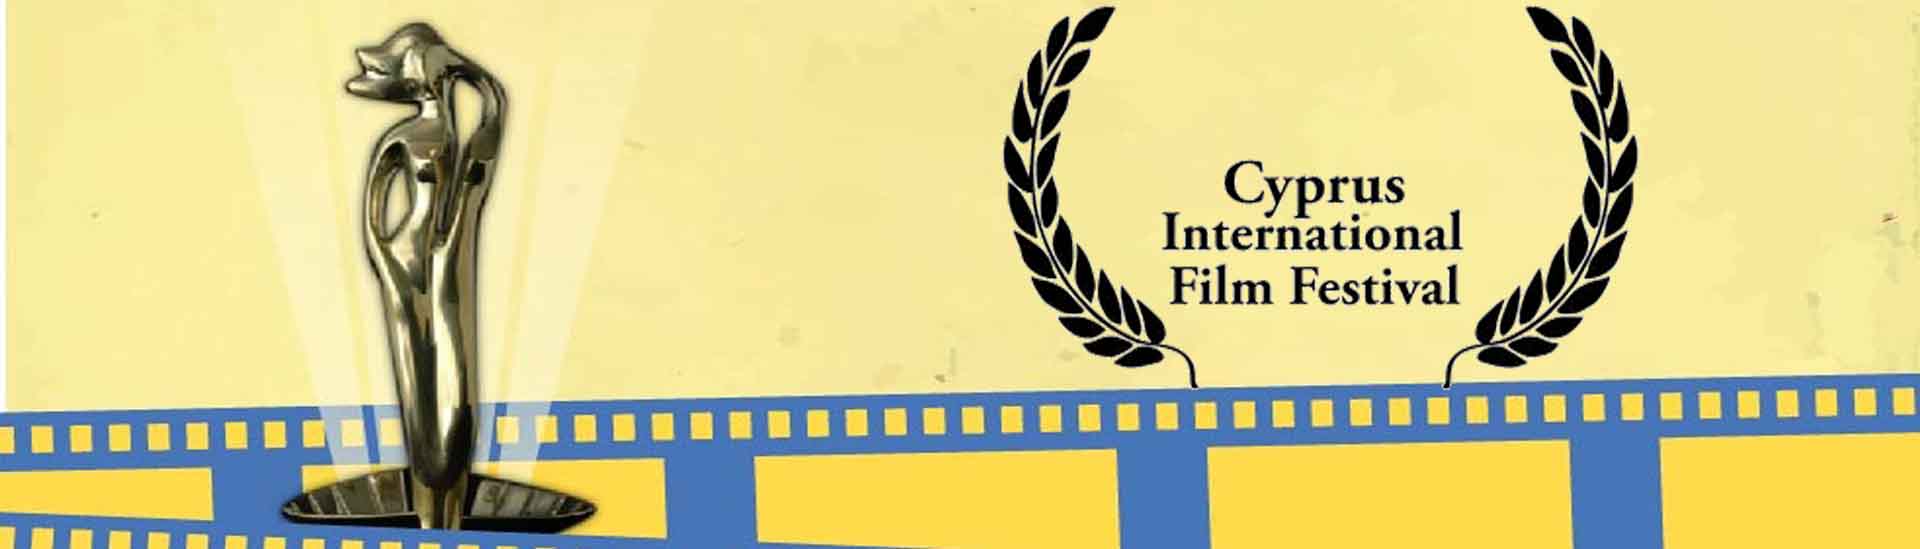 The Cyprus International Film Festival